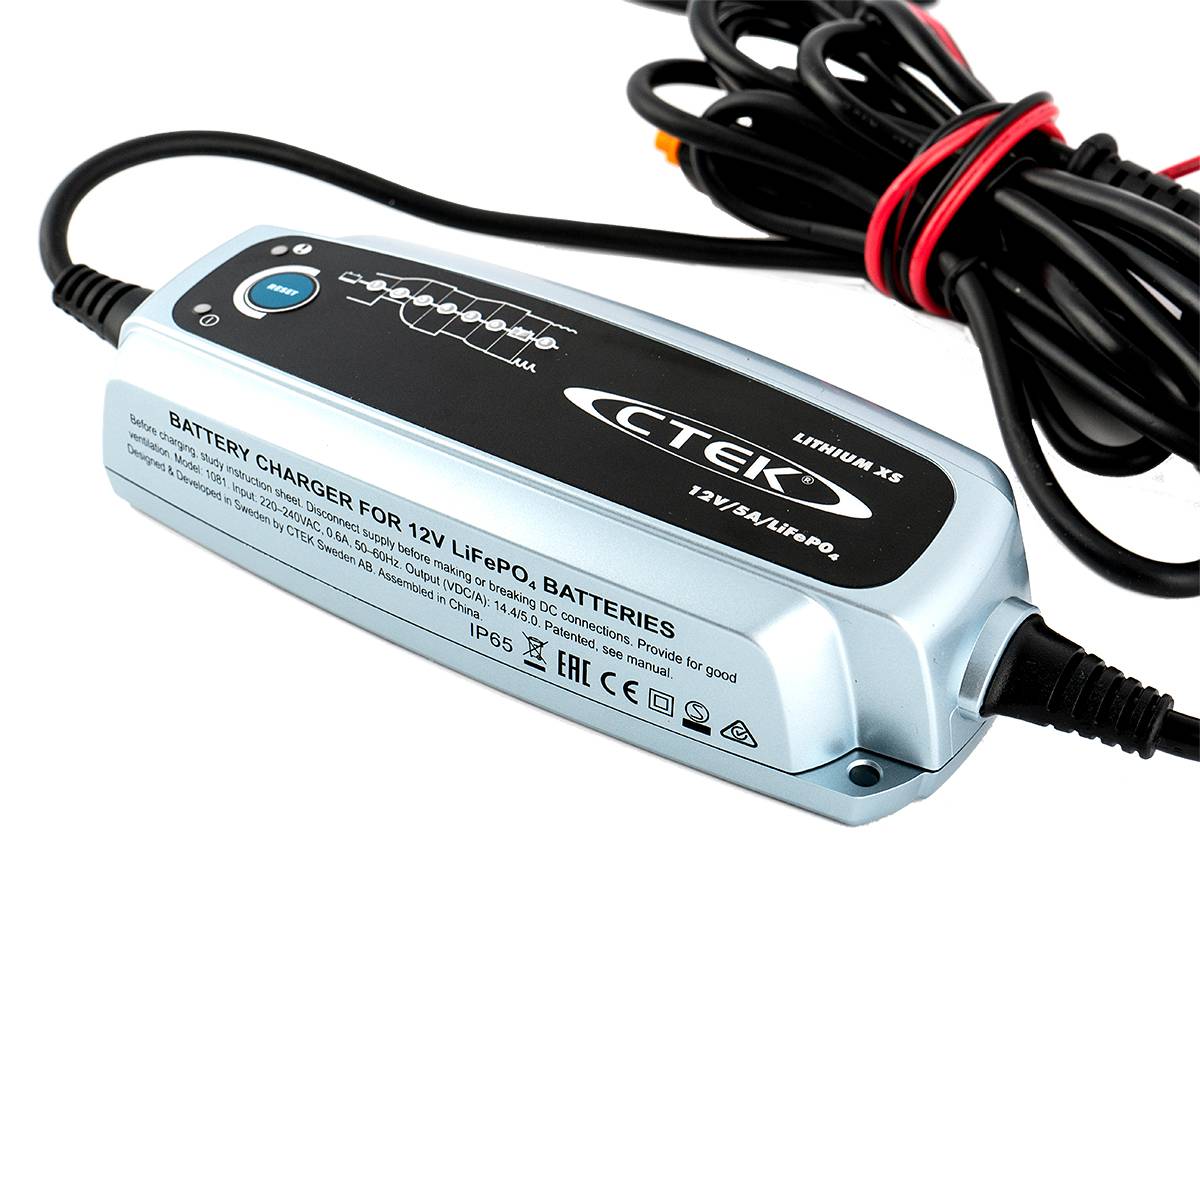 CTEK Lithium XS Batterie Ladegerät für LifePo4 Lithium 12V 5A